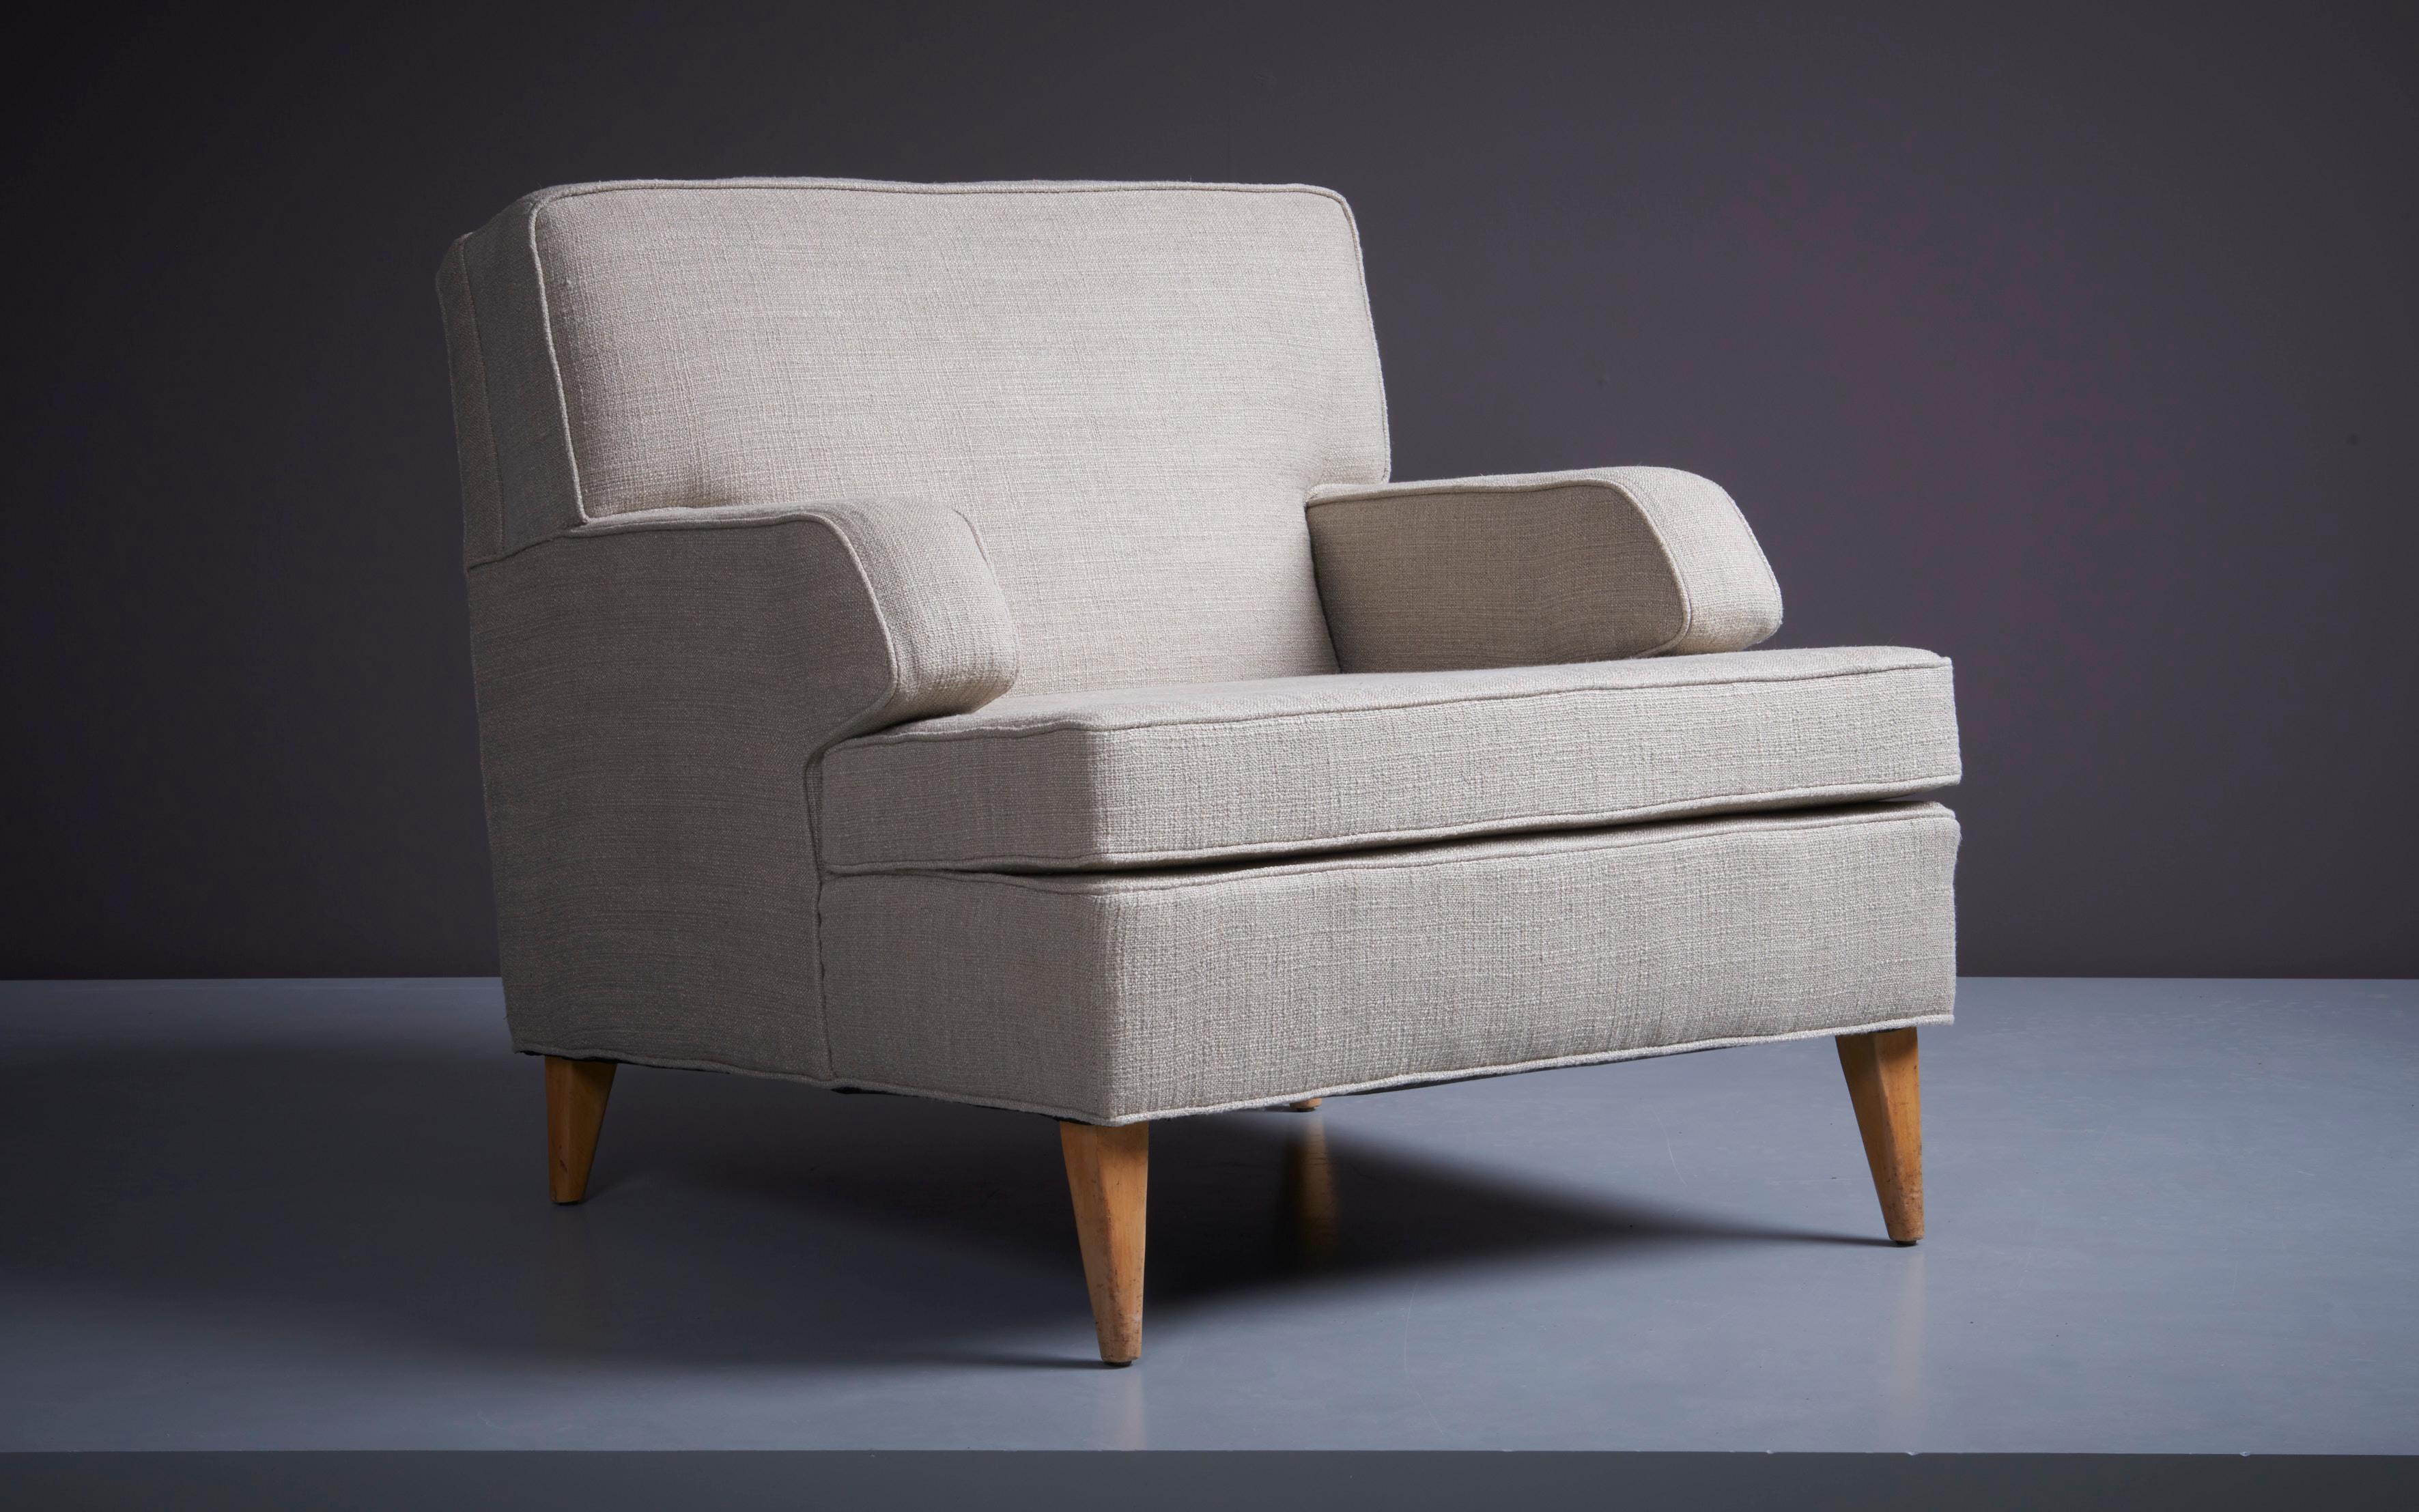 Rare New Upholstered Beige Paul McCobb Set for Directional, USA - 1950s For Sale 2